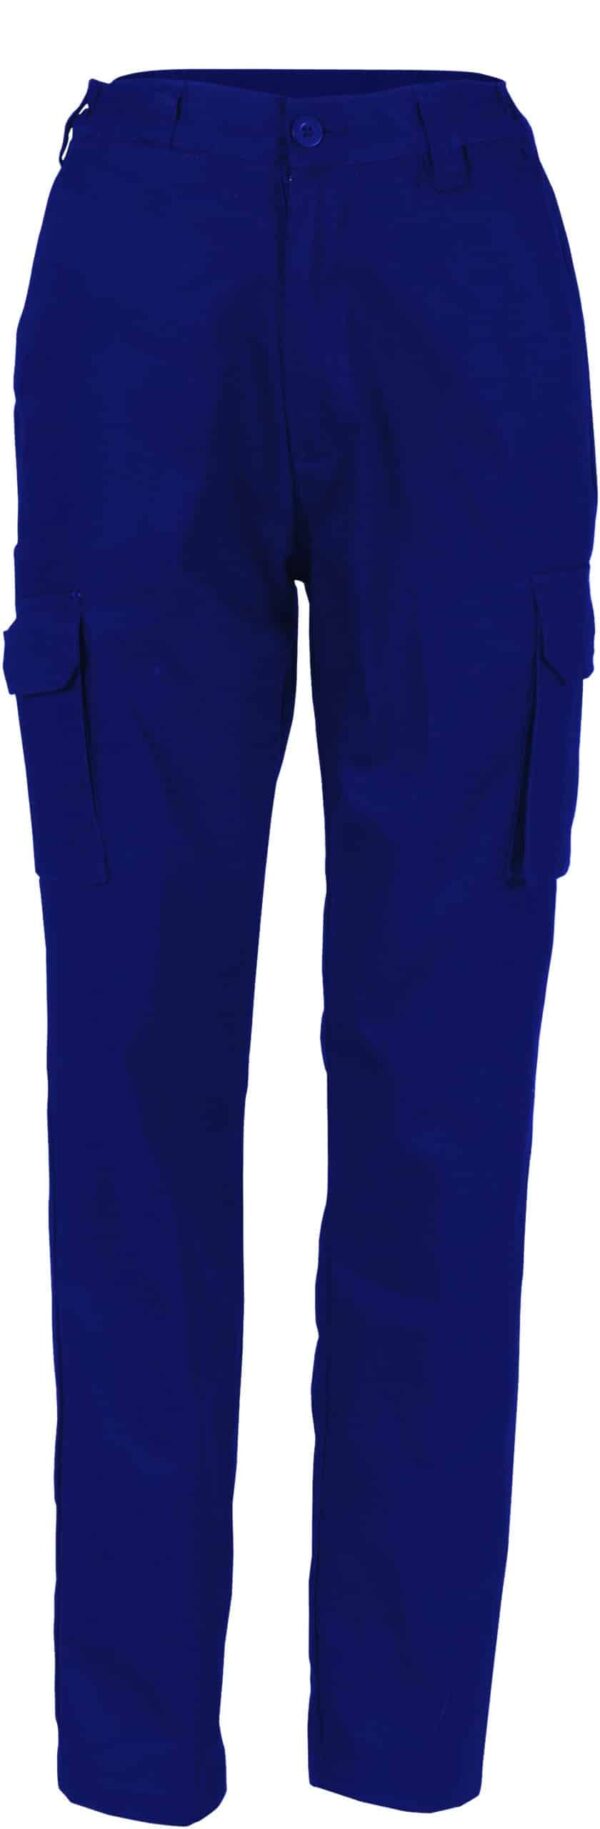 DNC Workwear Ladies Cotton Drill Cargo Pants